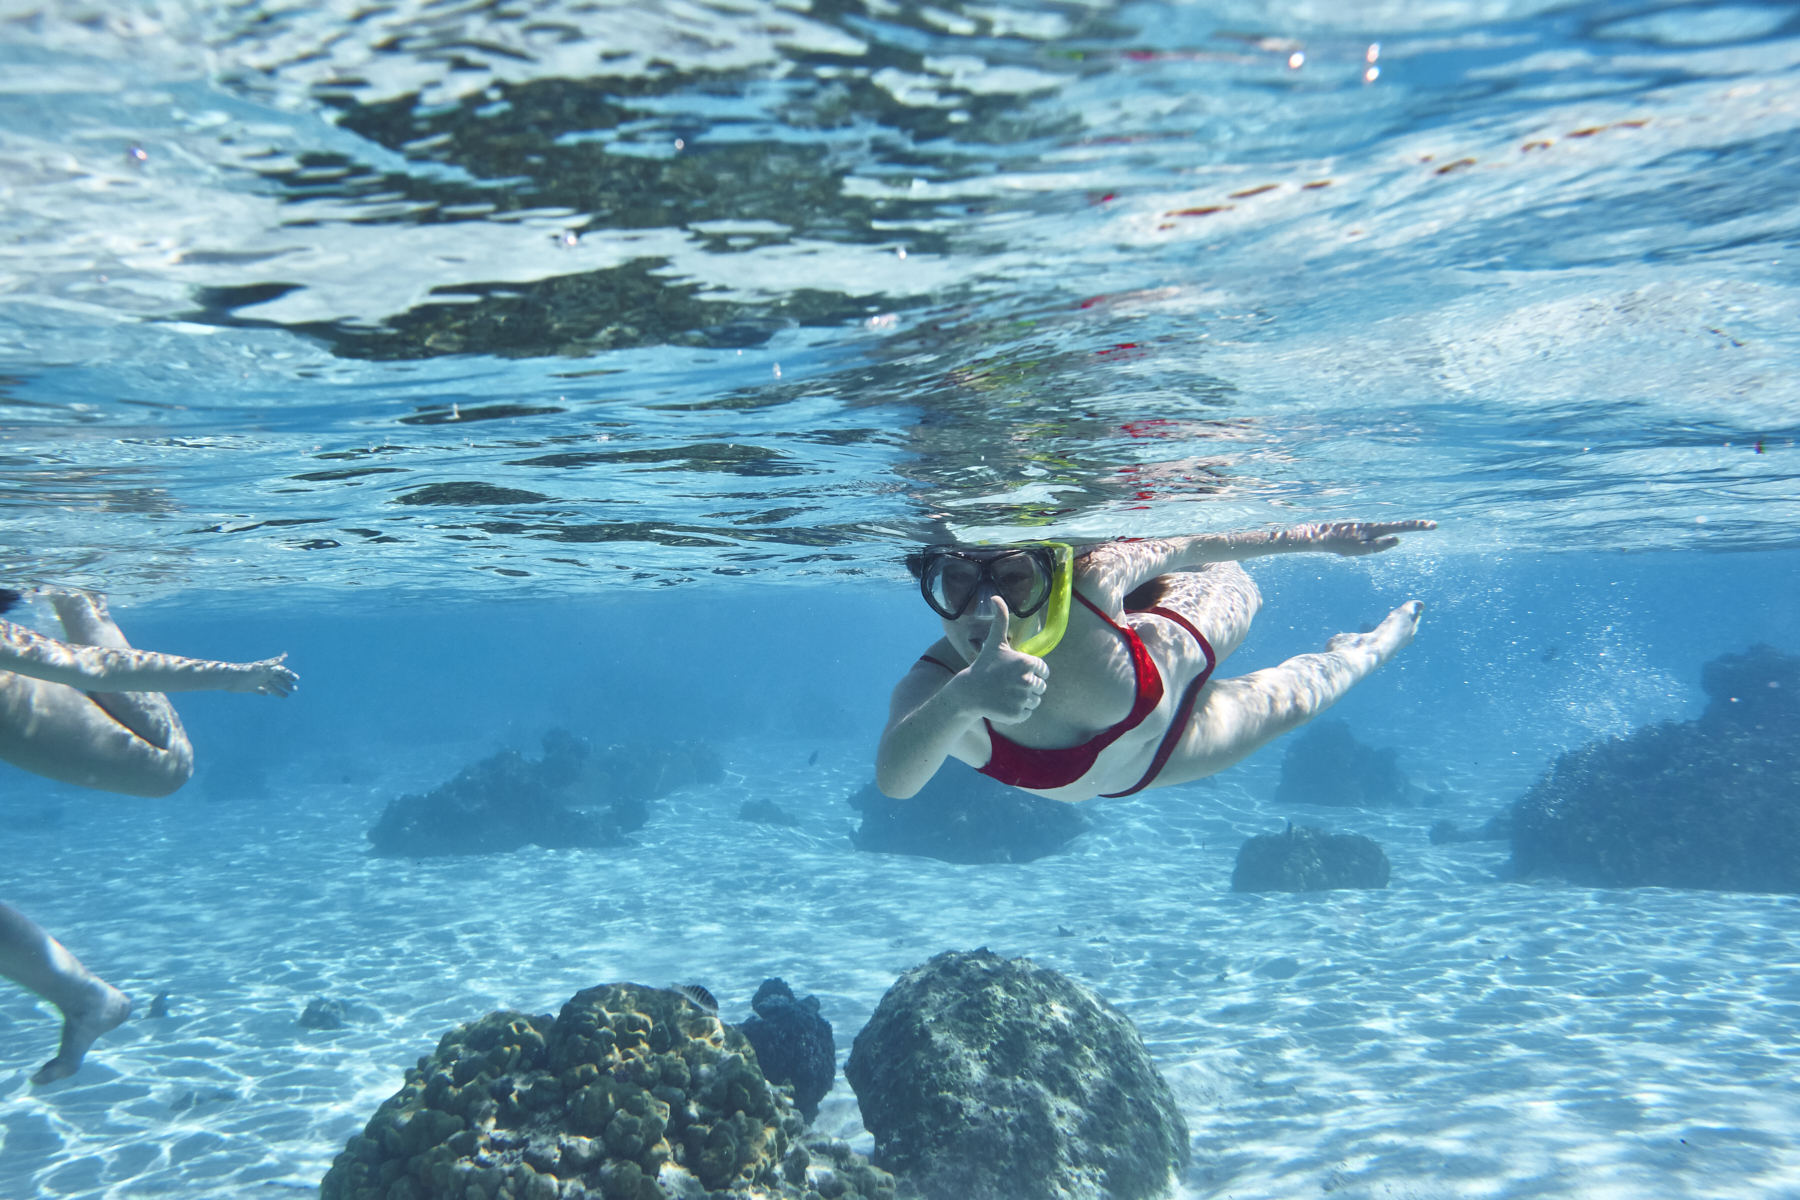 Temae Beach, Mo'orea, Tahiti, exploring underwater with Belle and India